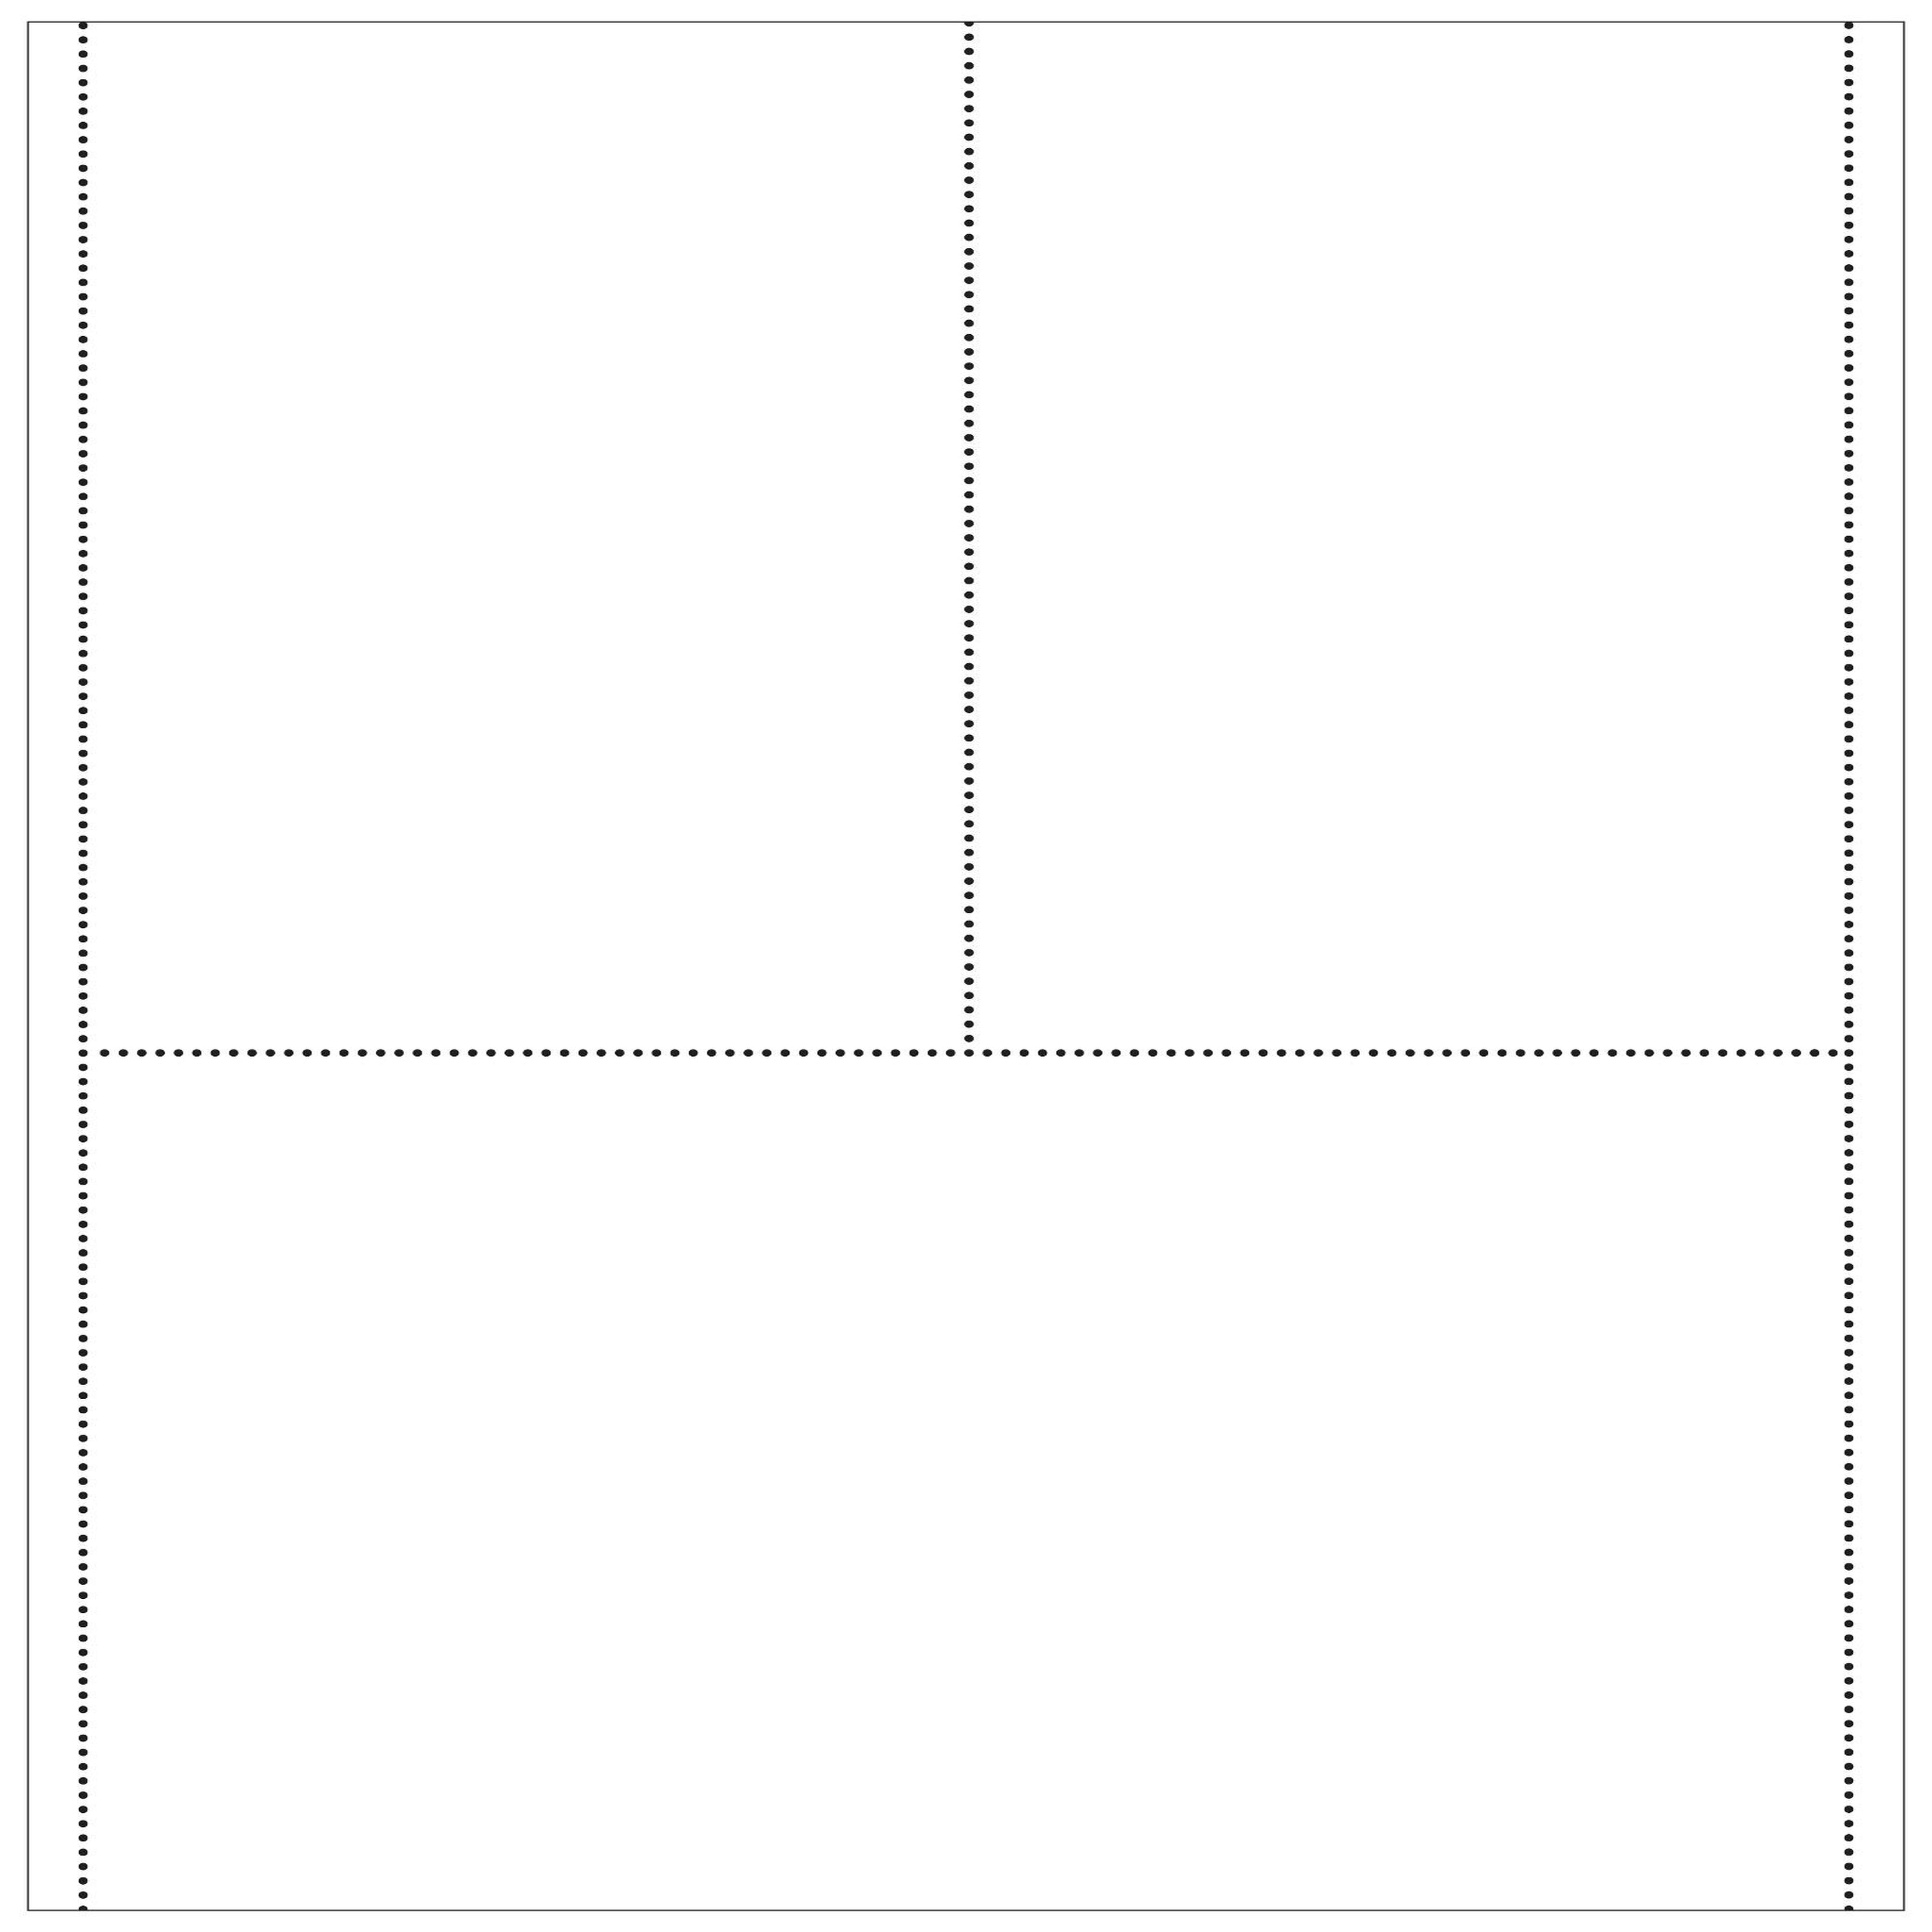 Grid Paper Printable Insert